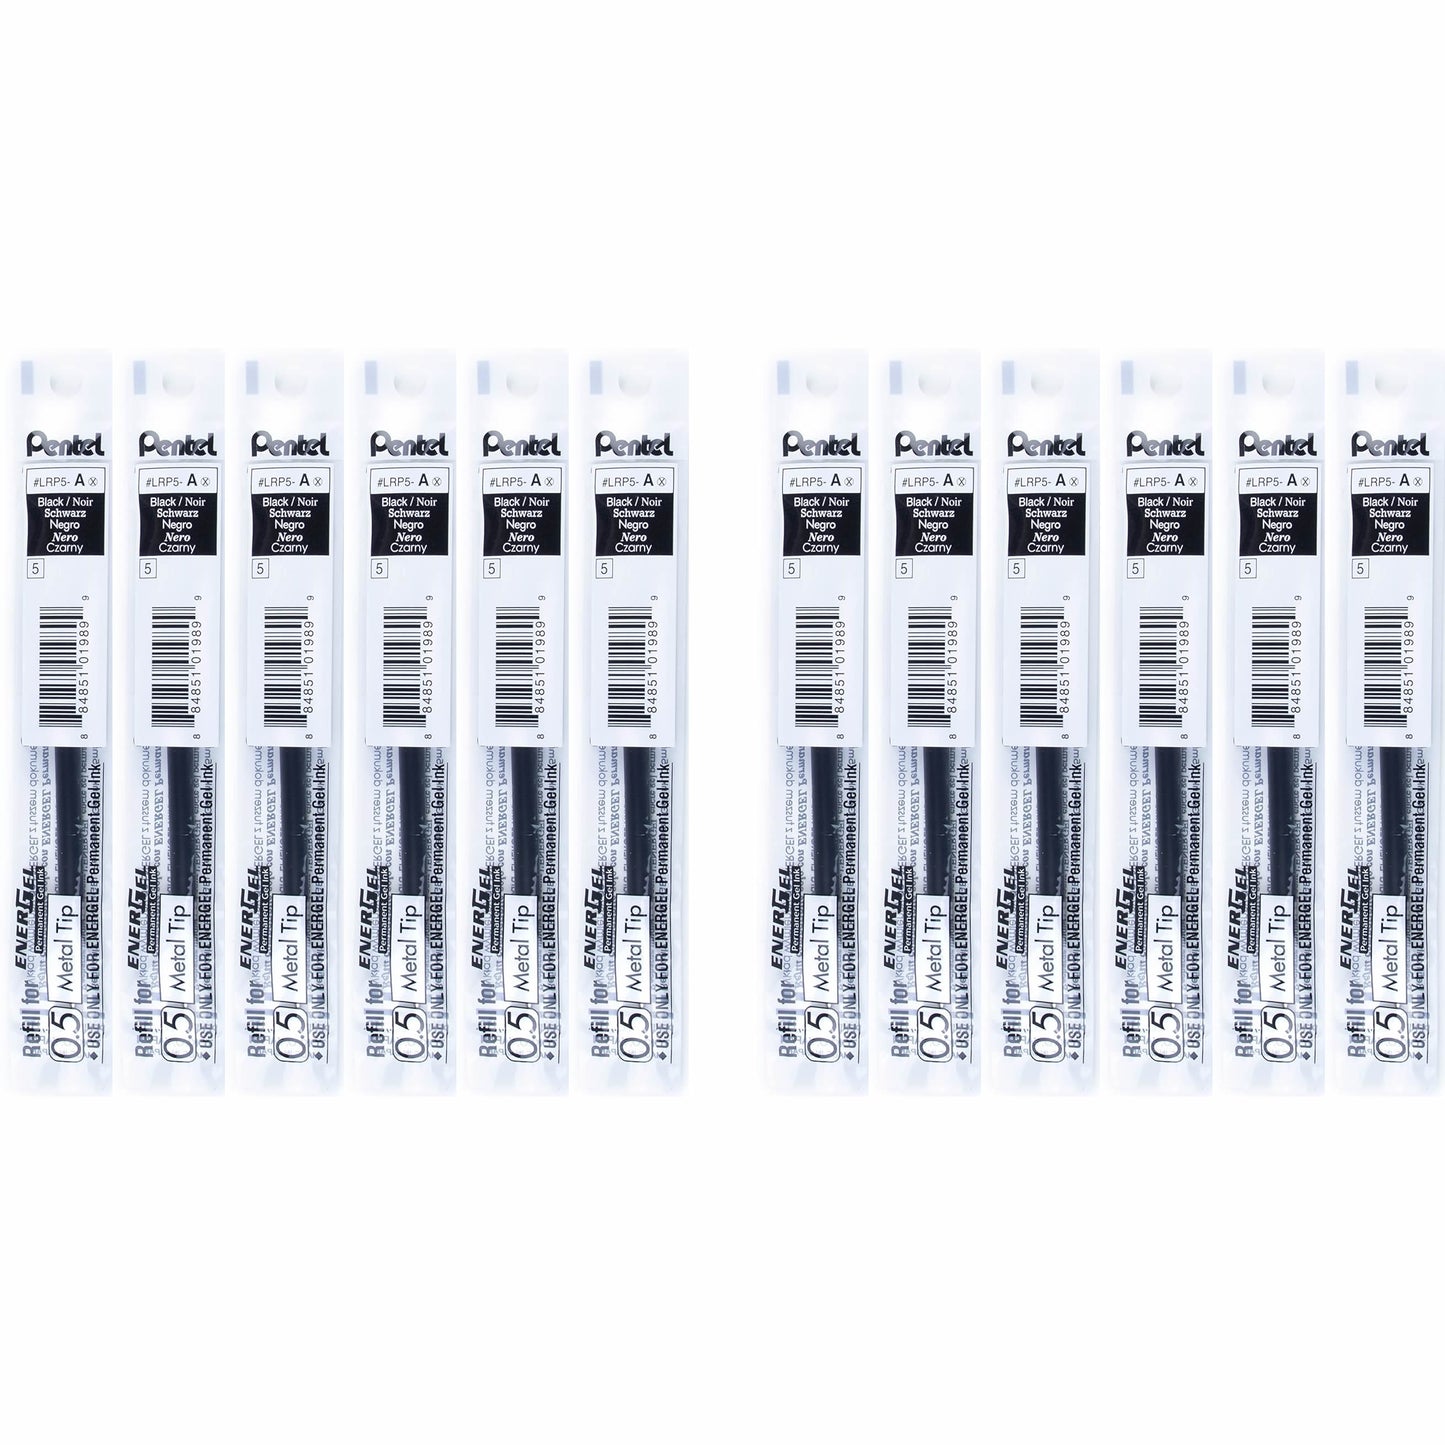 Pentel EnerGel 0.5mm Permanent Gel Pen Refills (Pack of 12)